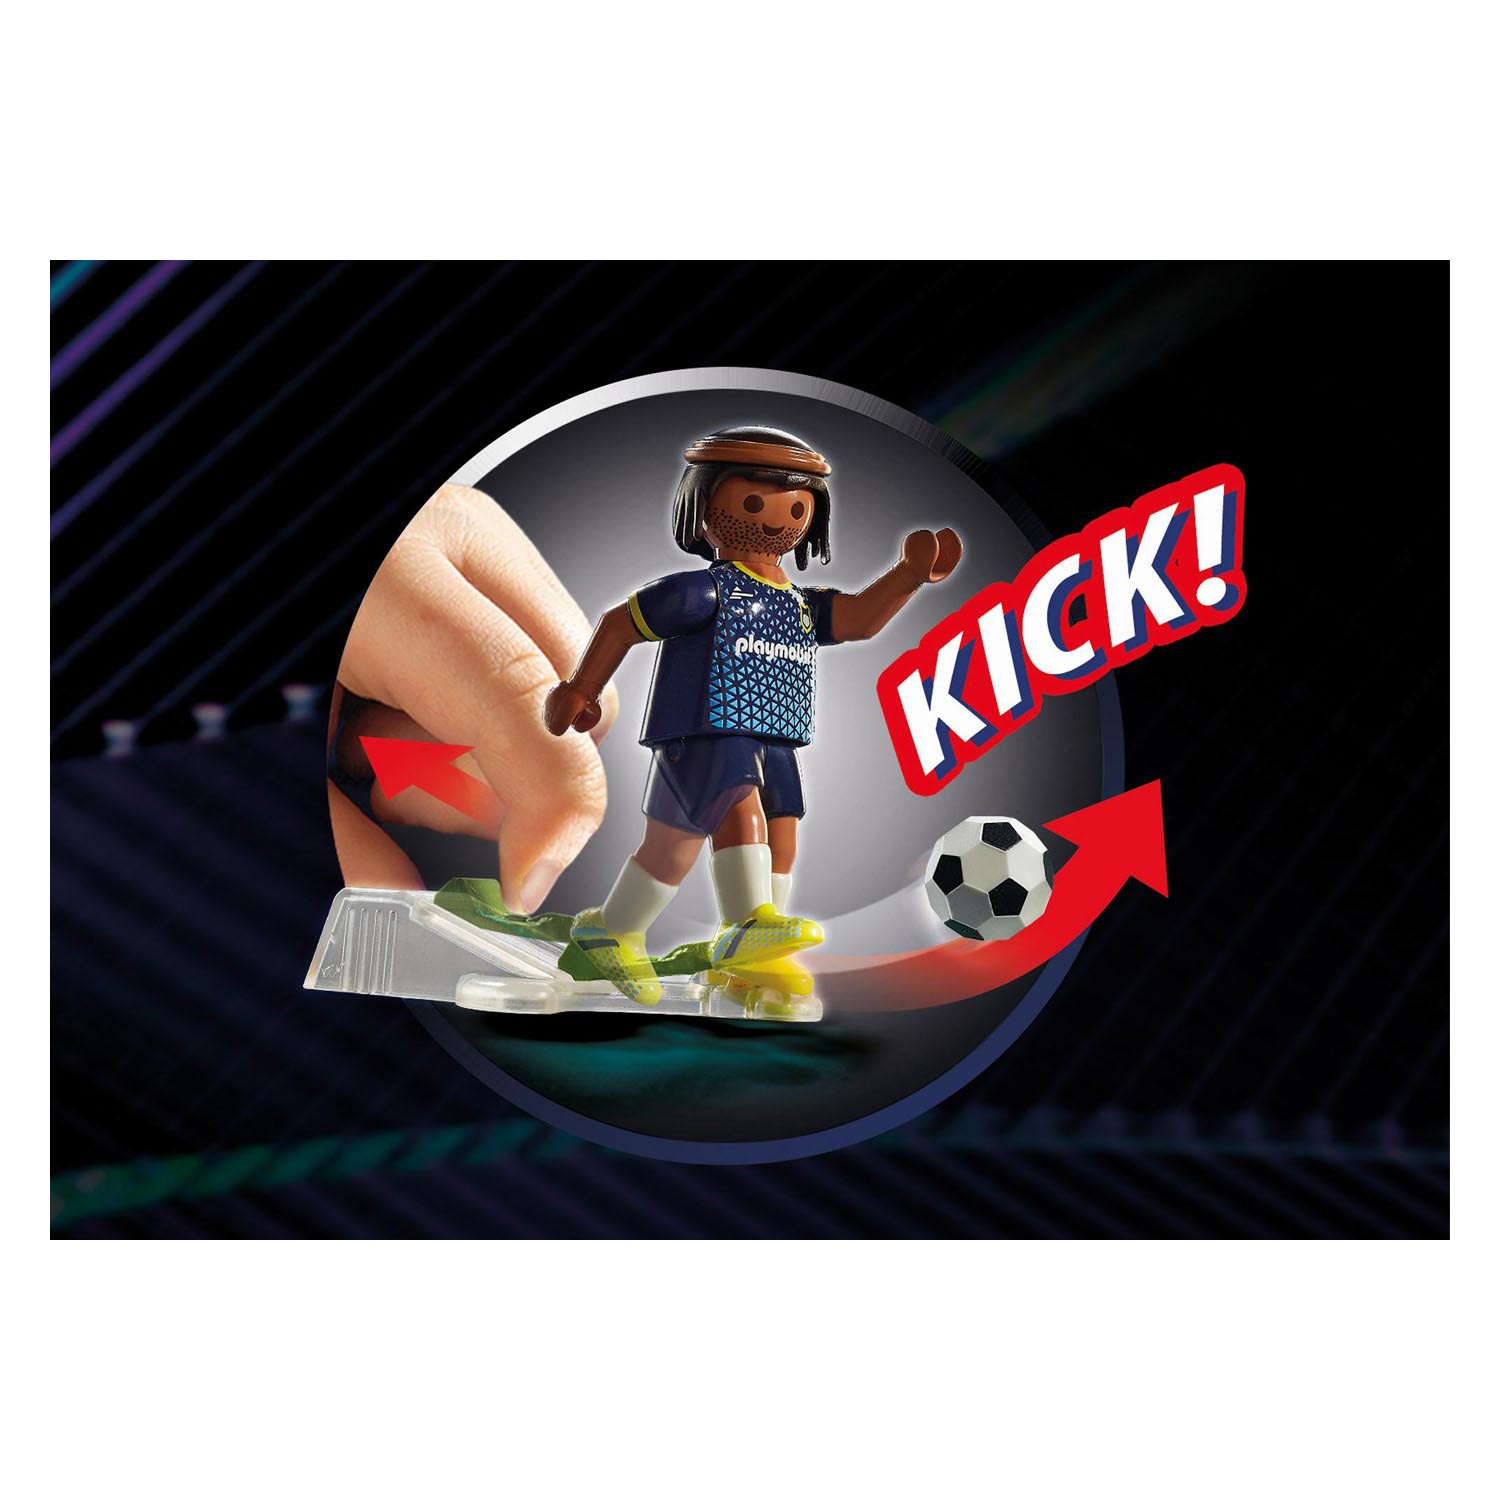 Playmobil Sports & Action Voetbalarena - 71120